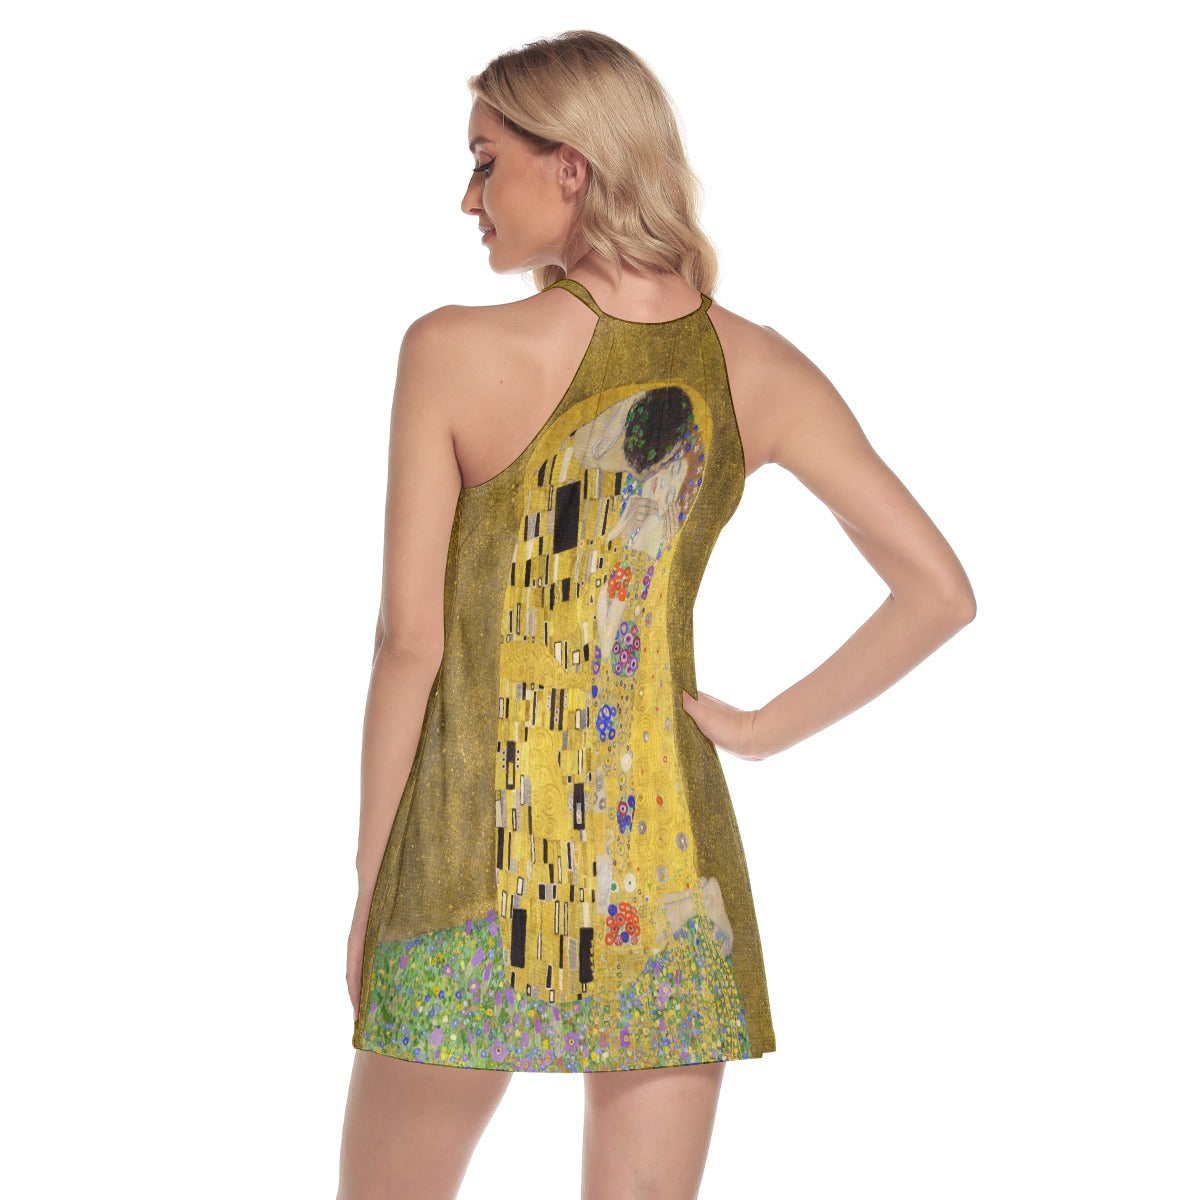 Mystical Artistic Dress - Ethereal Fashion Apparel